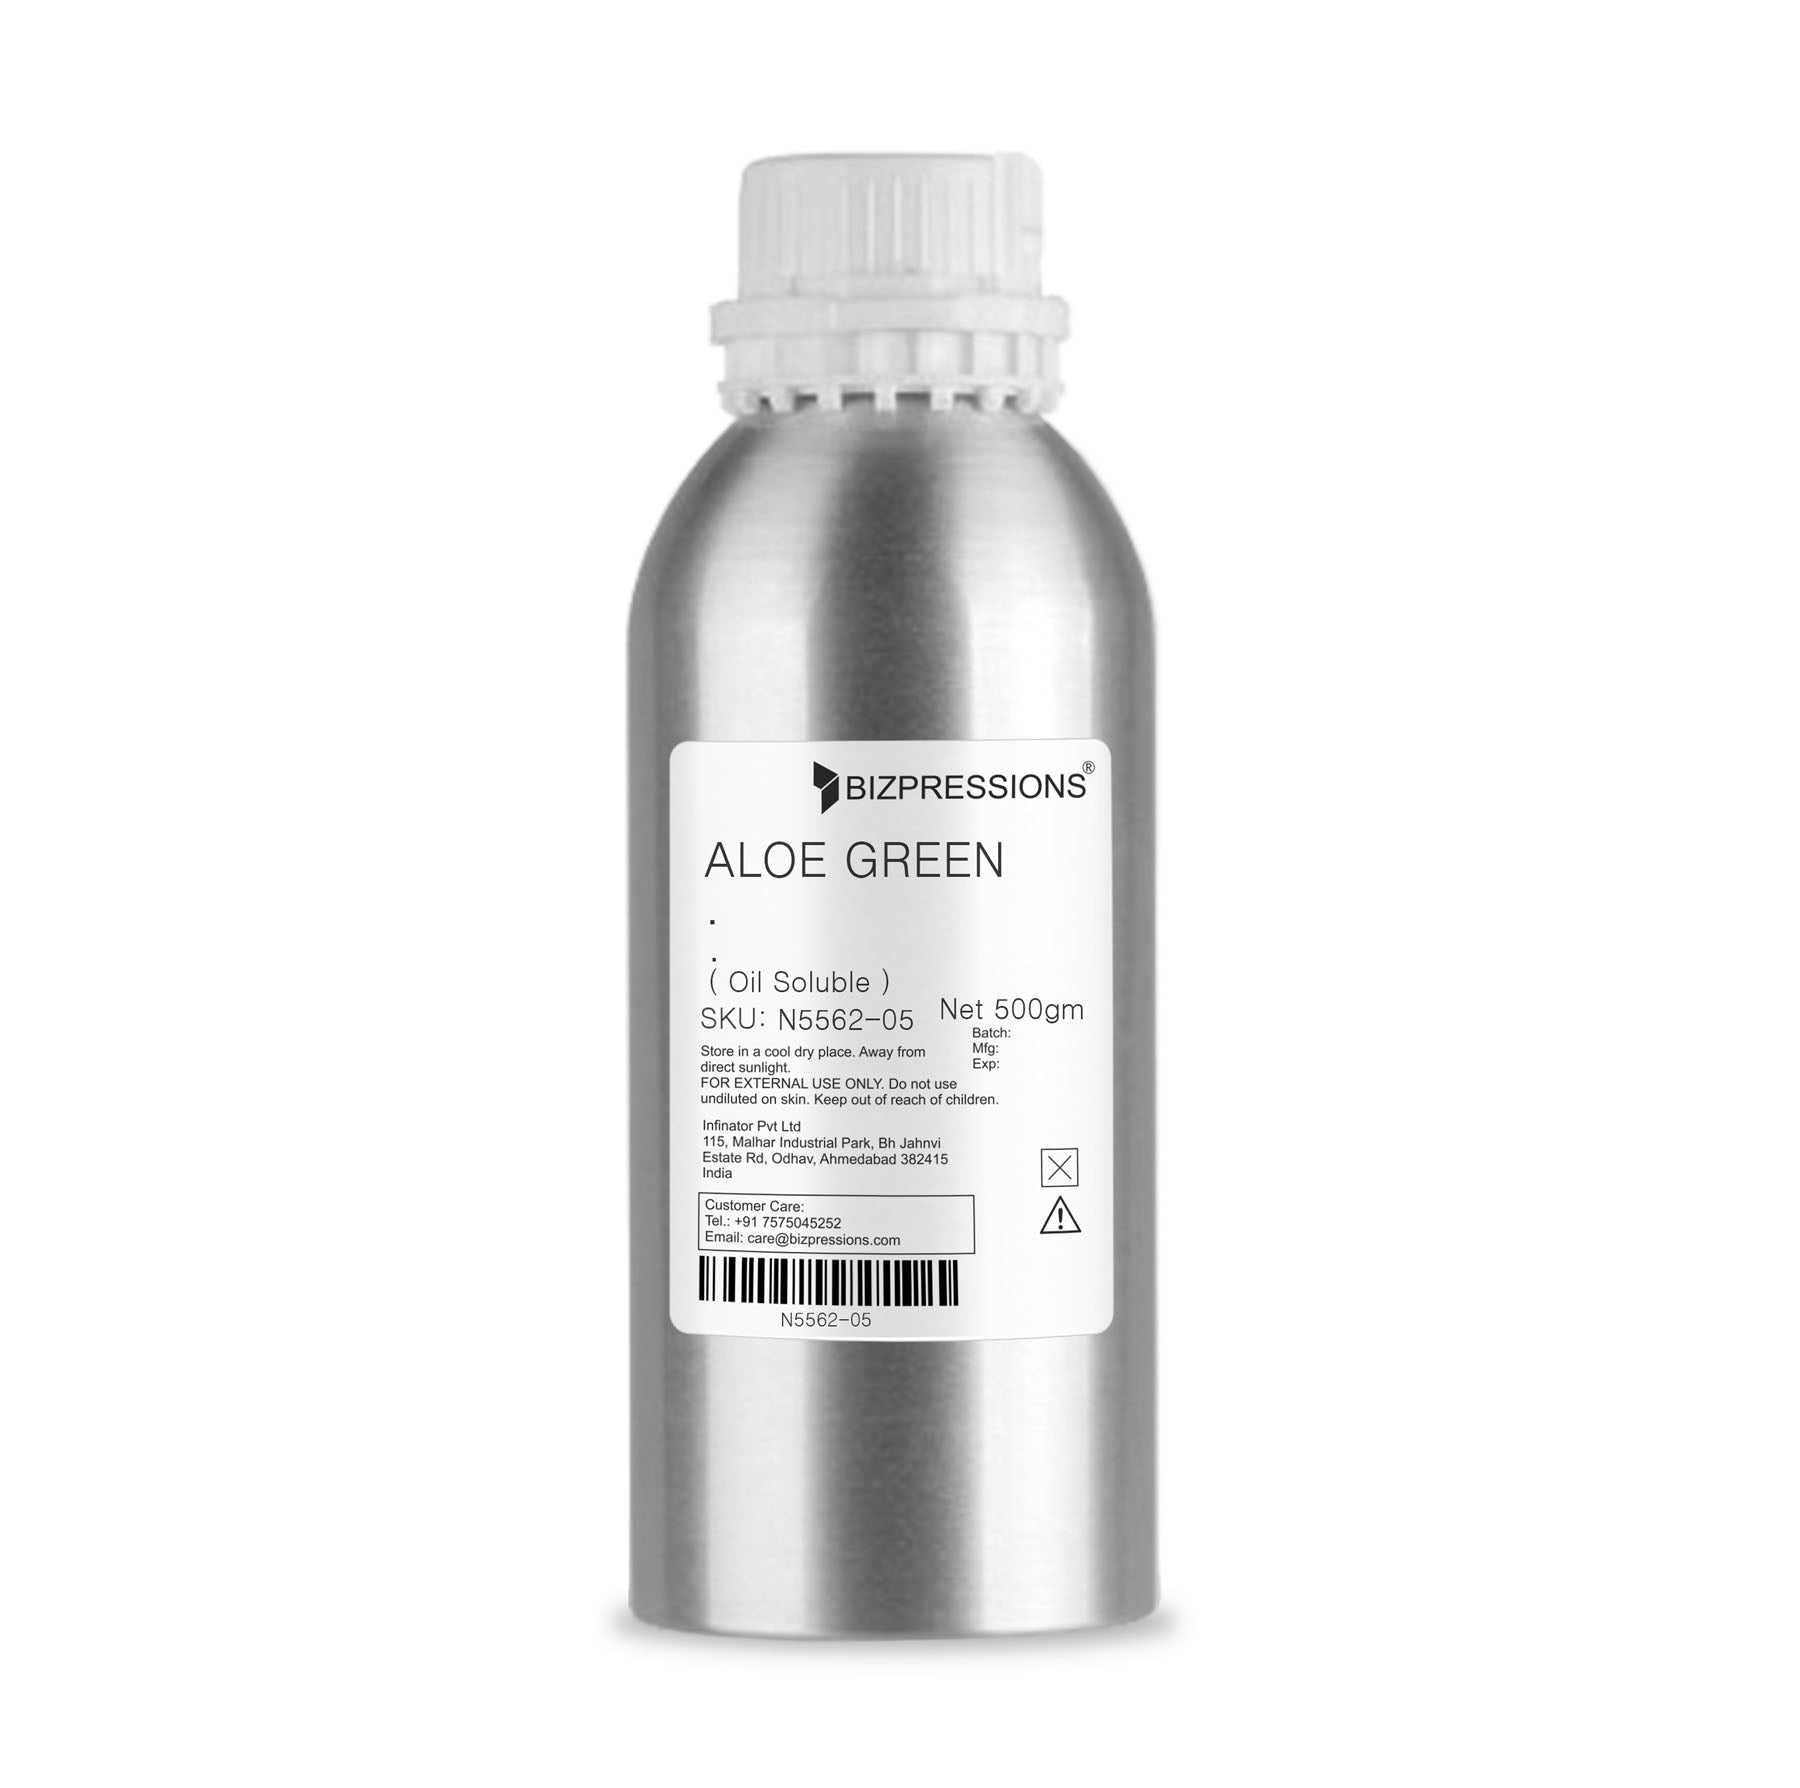 ALOE GREEN - Fragrance ( Oil Soluble ) - 500 gm